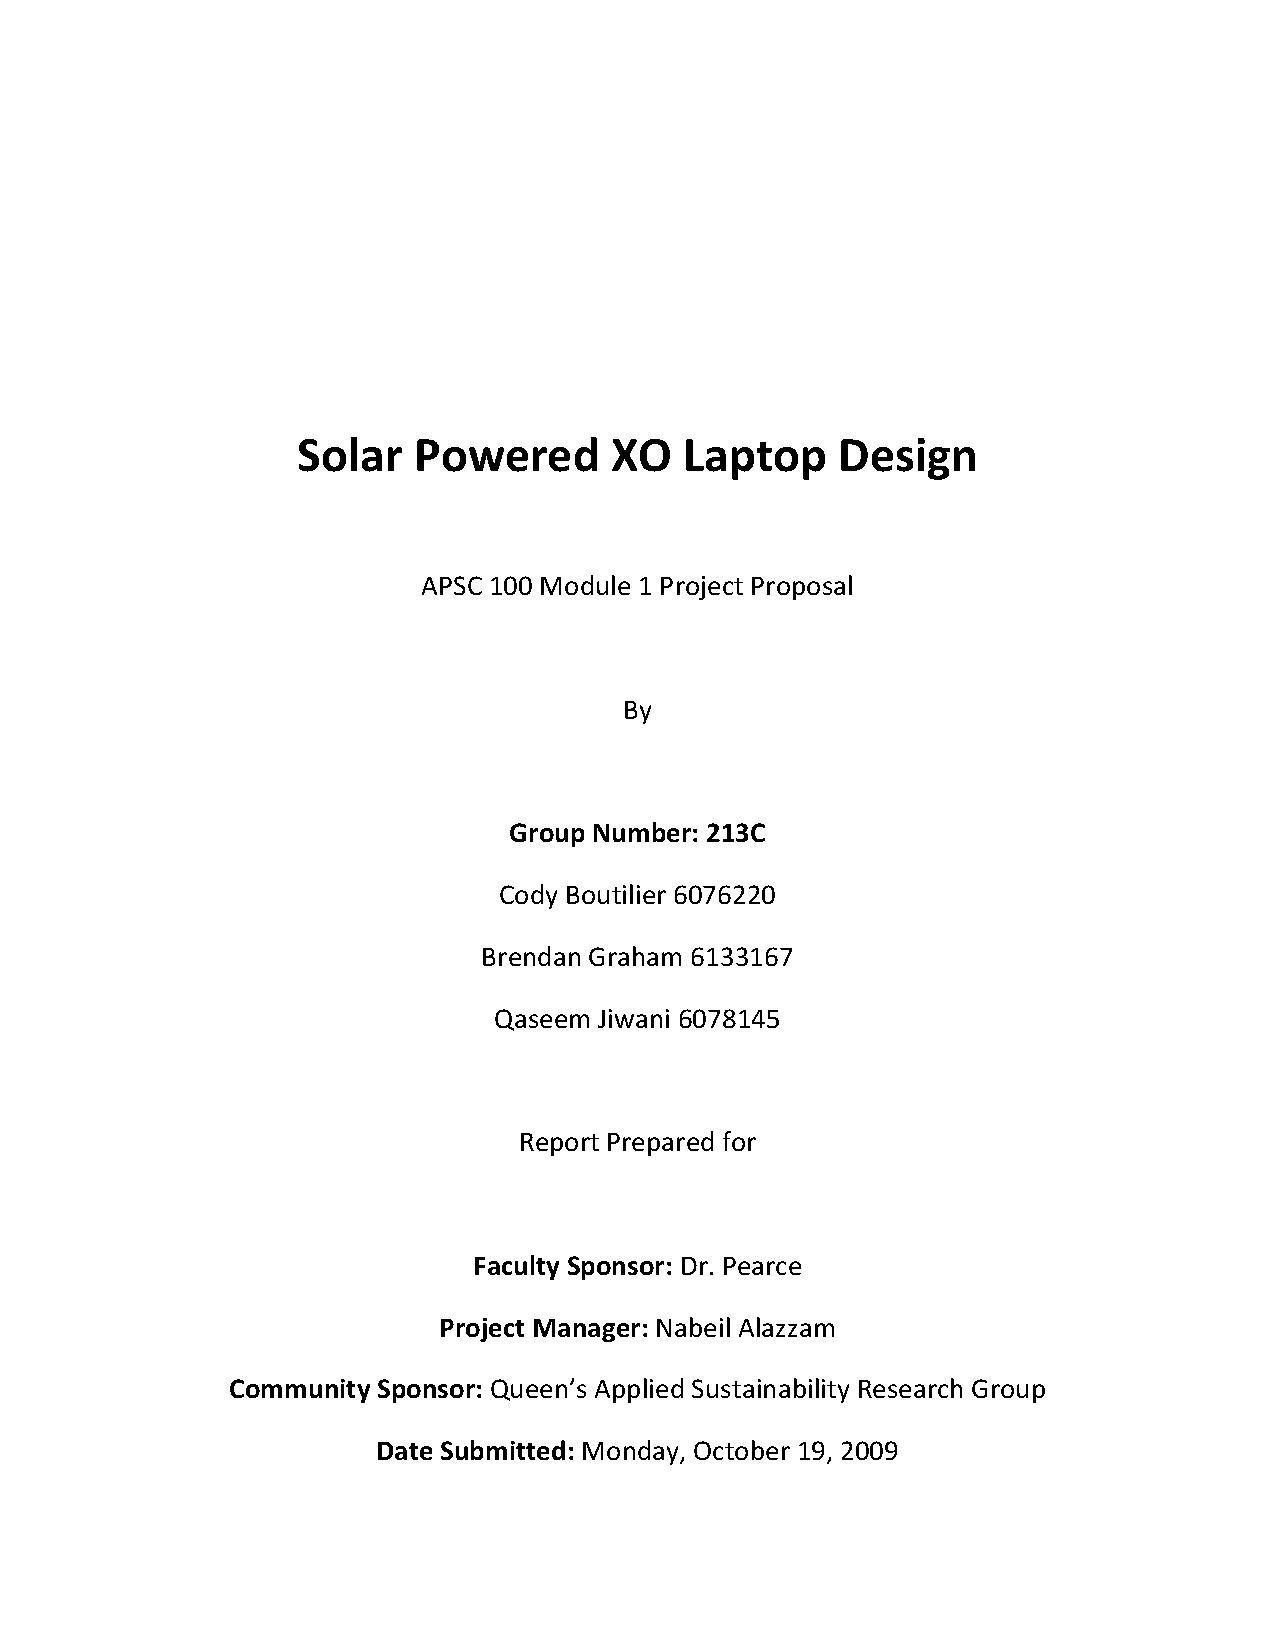 Proposal Report - 213C - Good Copy.pdf